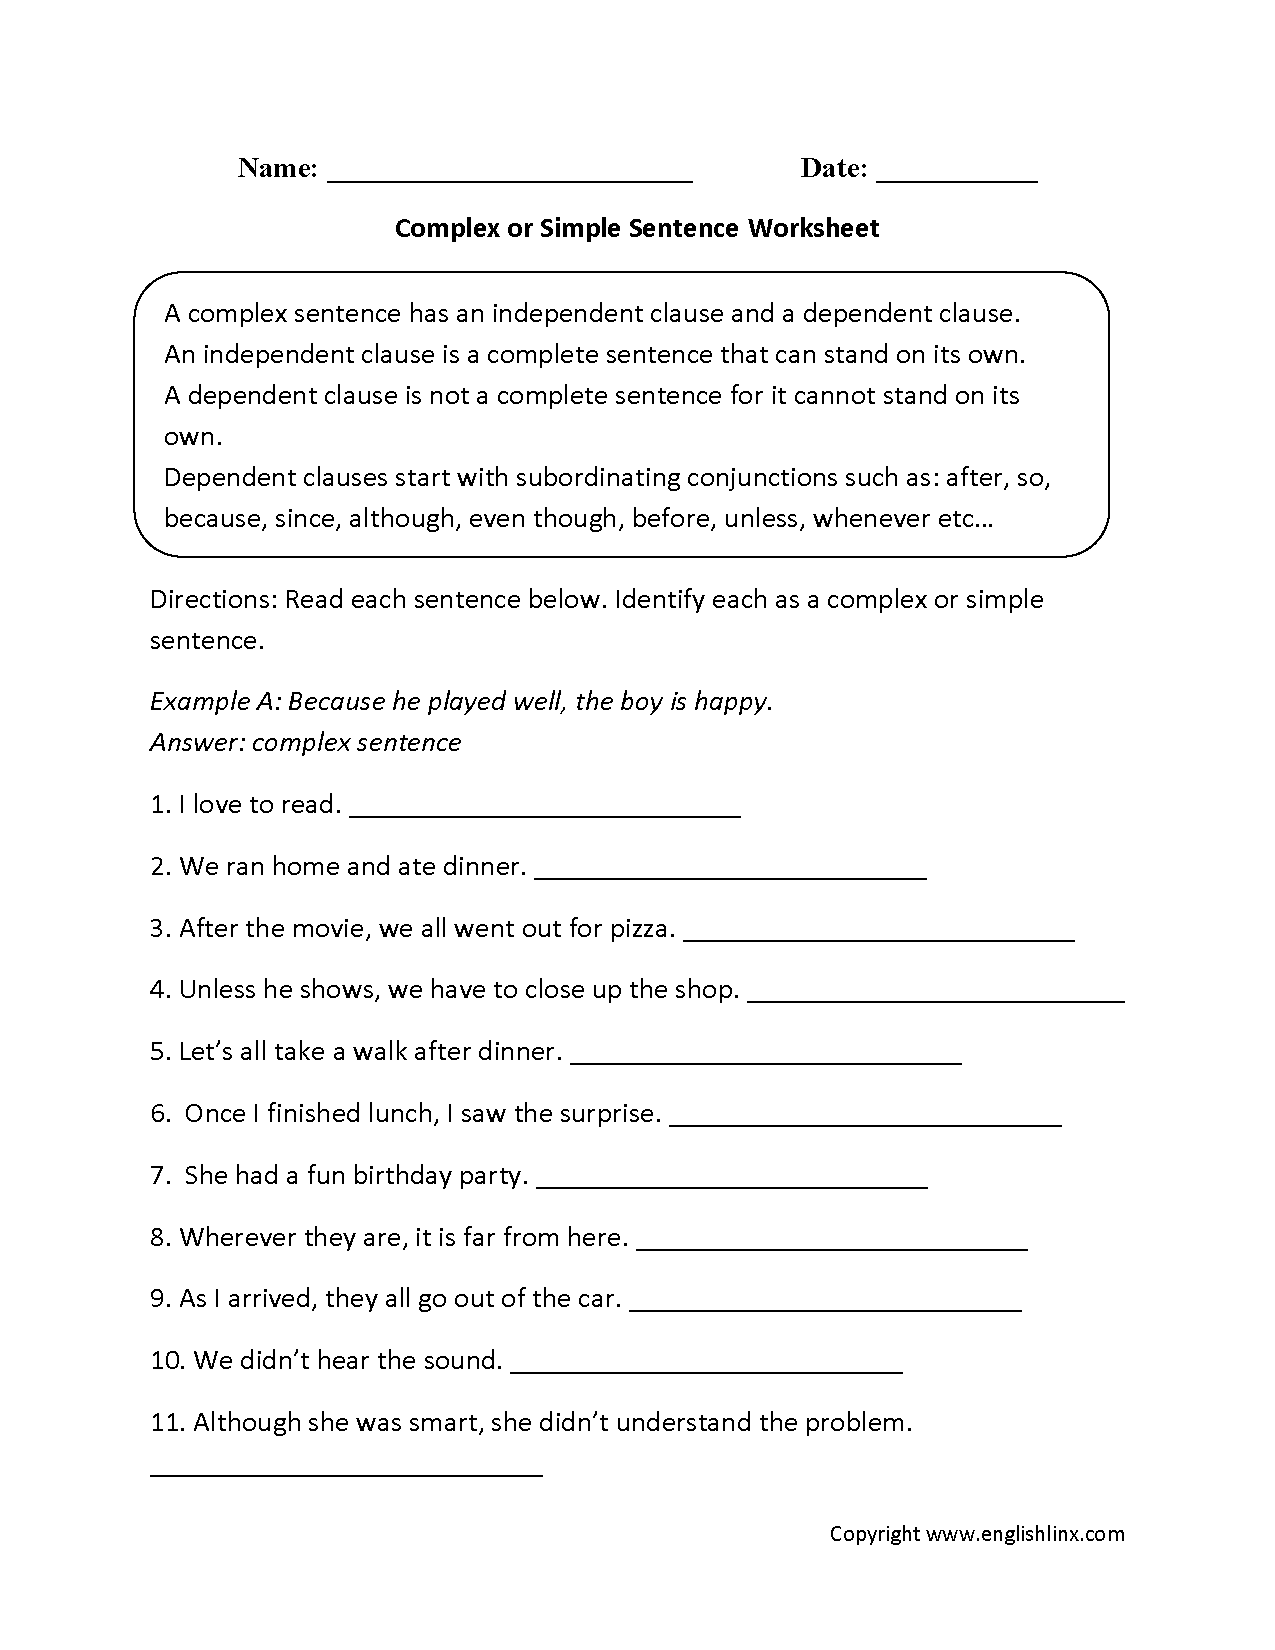 Complex or Simple Sentence Worksheet